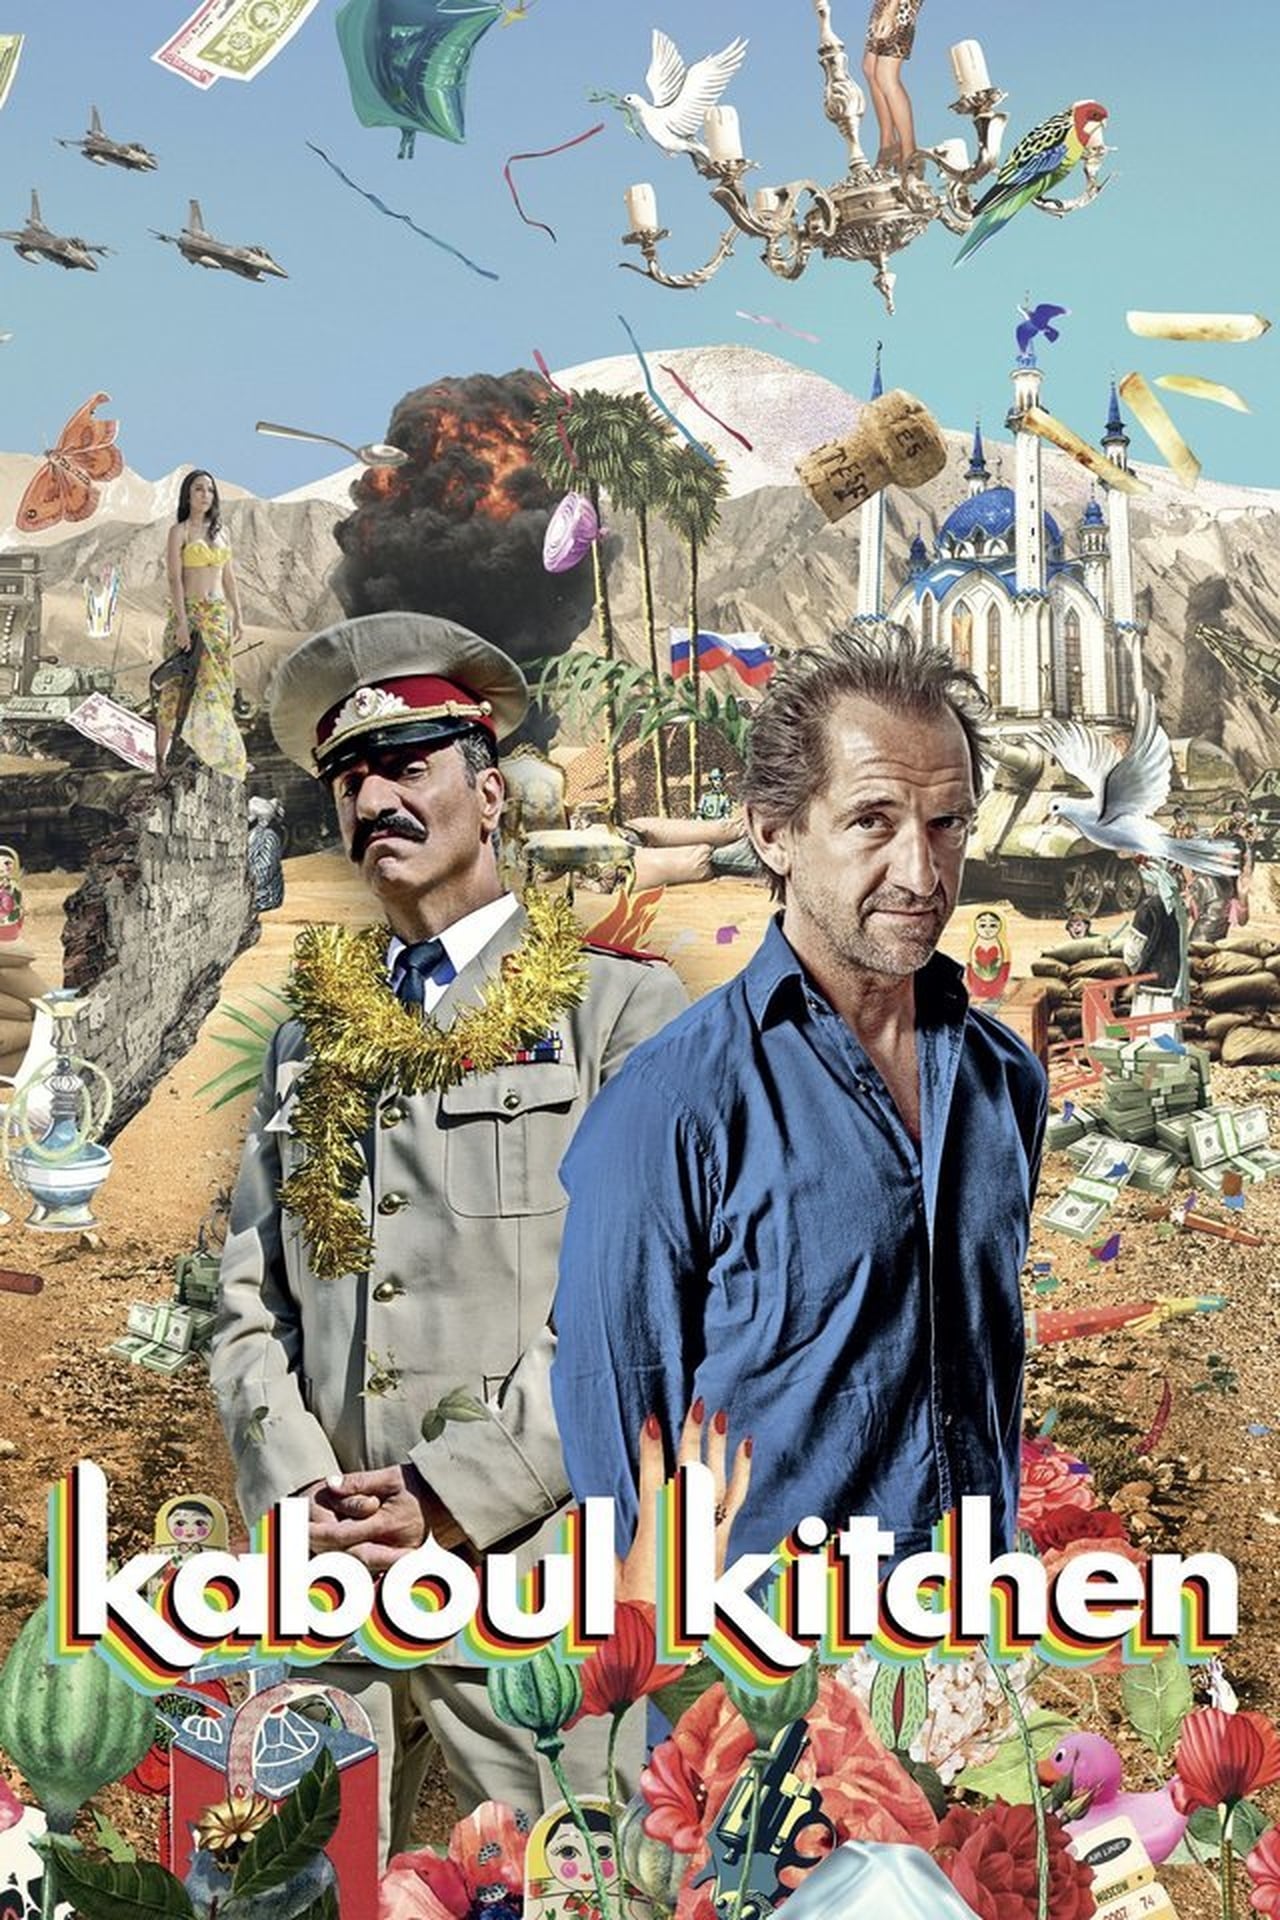 Kaboul Kitchen Season 3